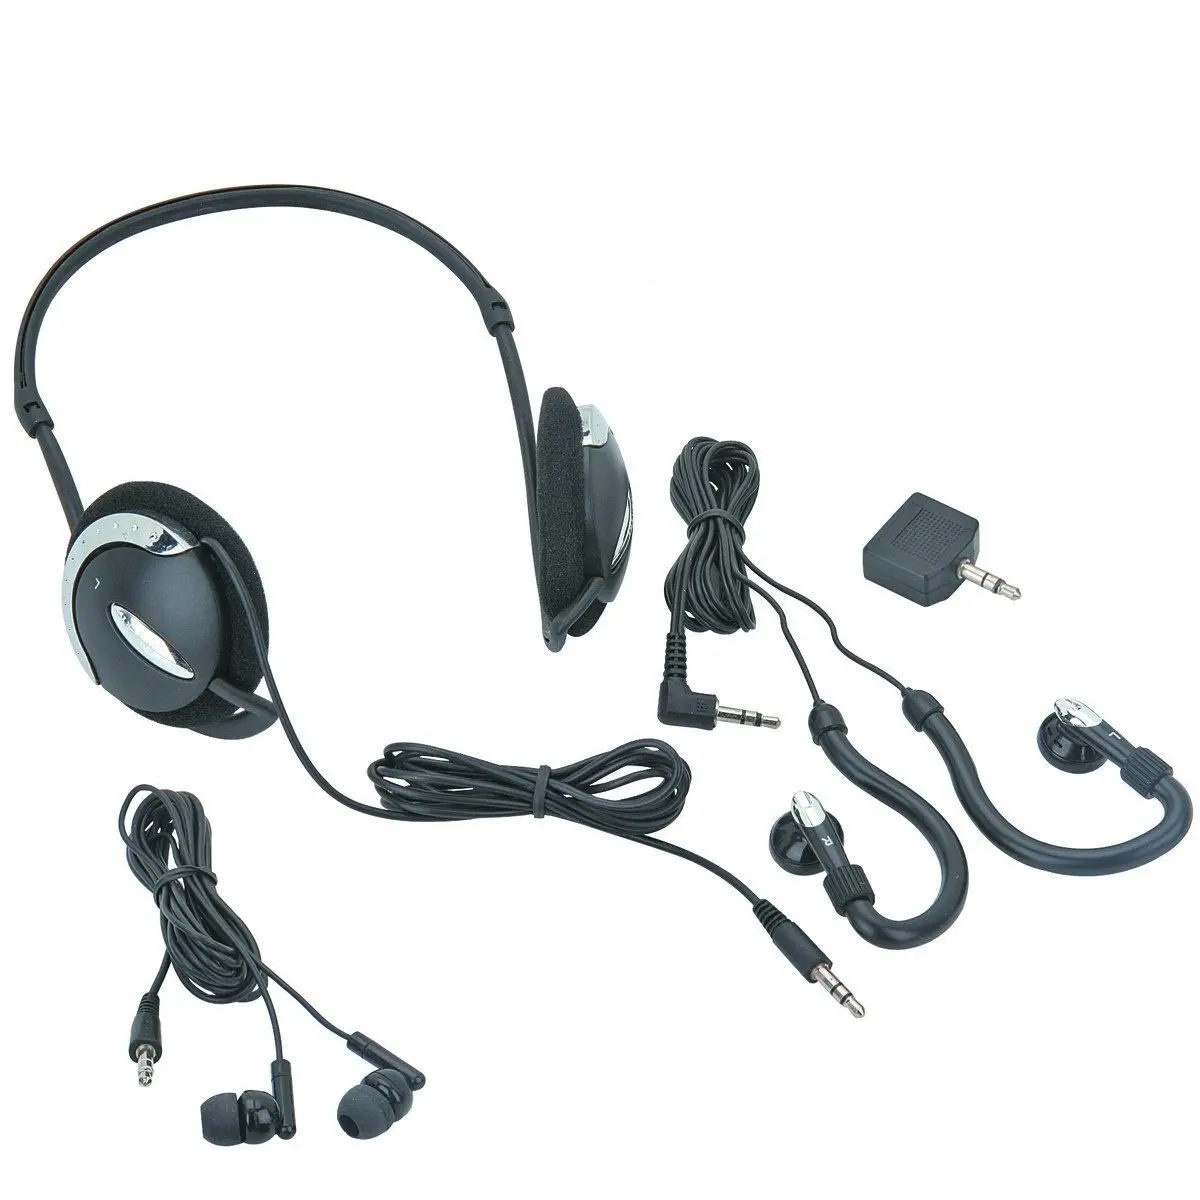 split headphones from dcommand phones